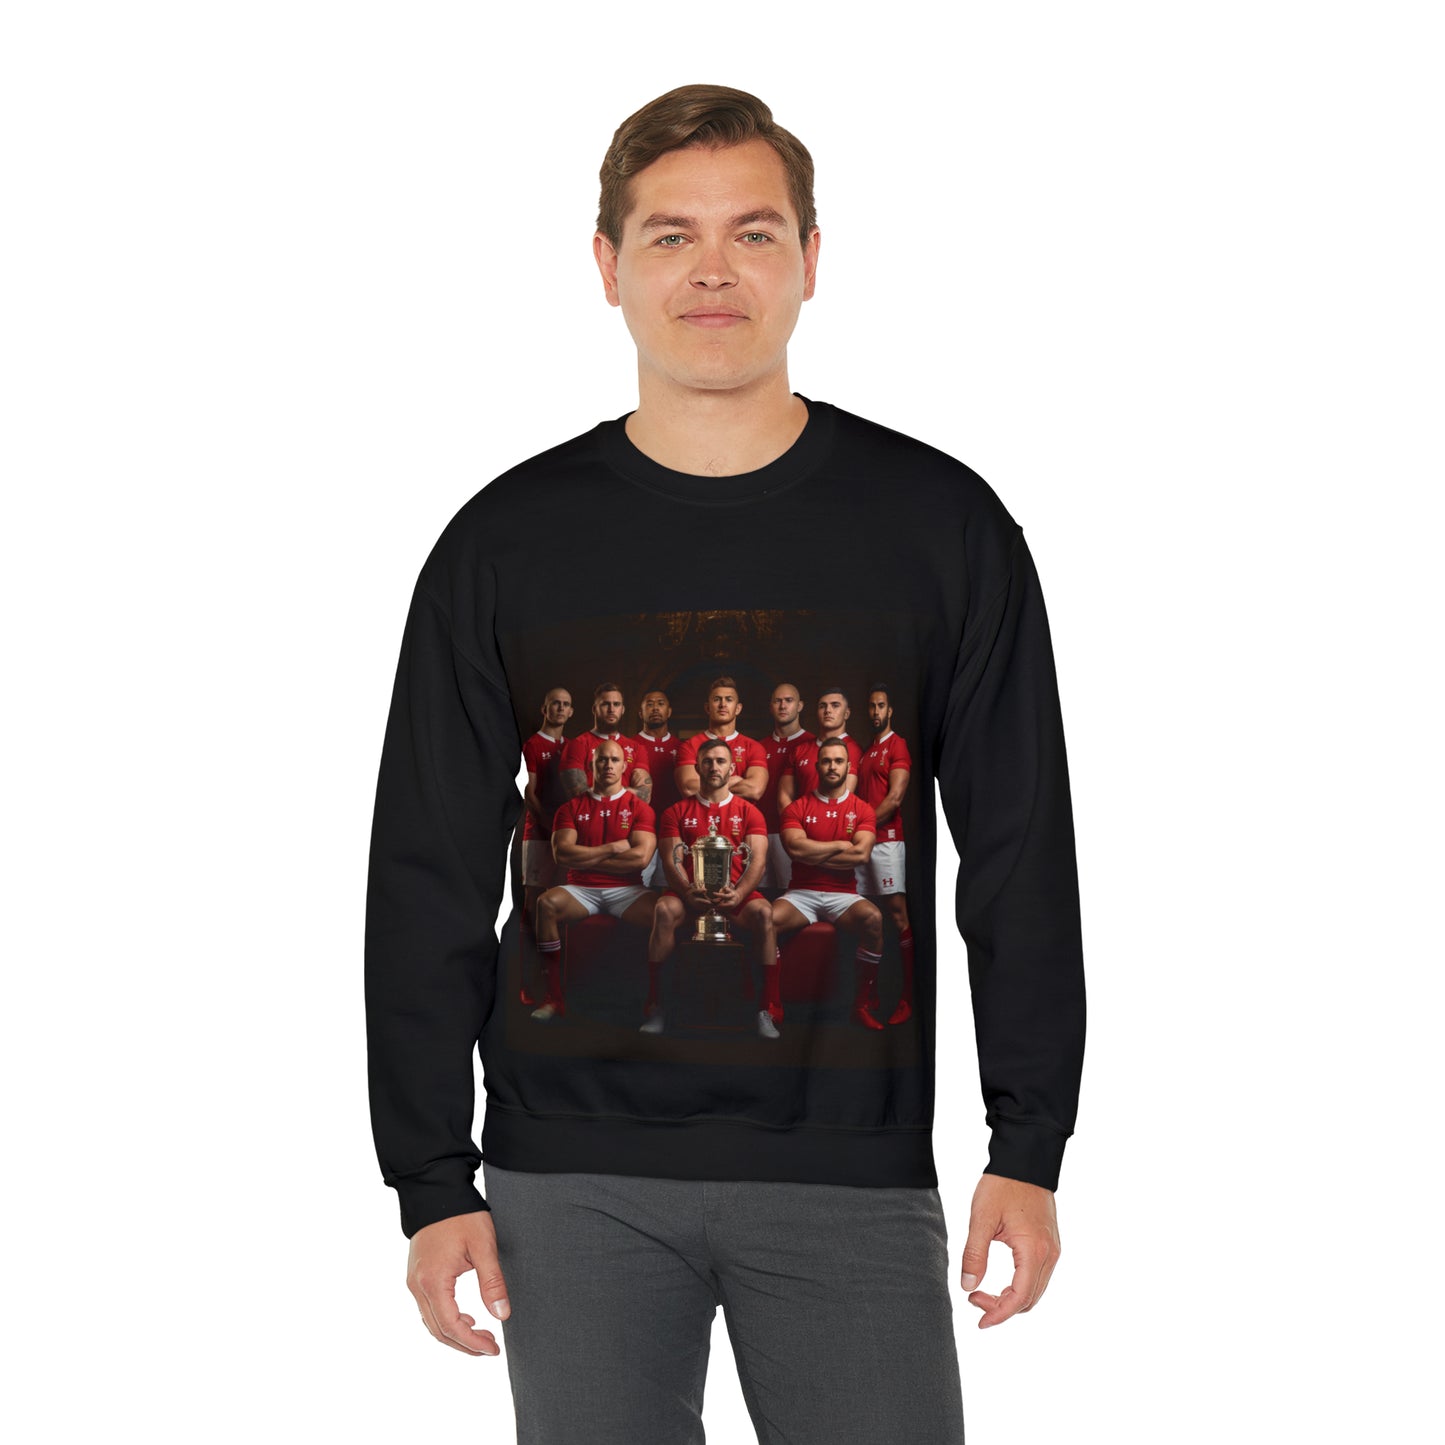 Wales RWC Photoshoot - black sweatshirt